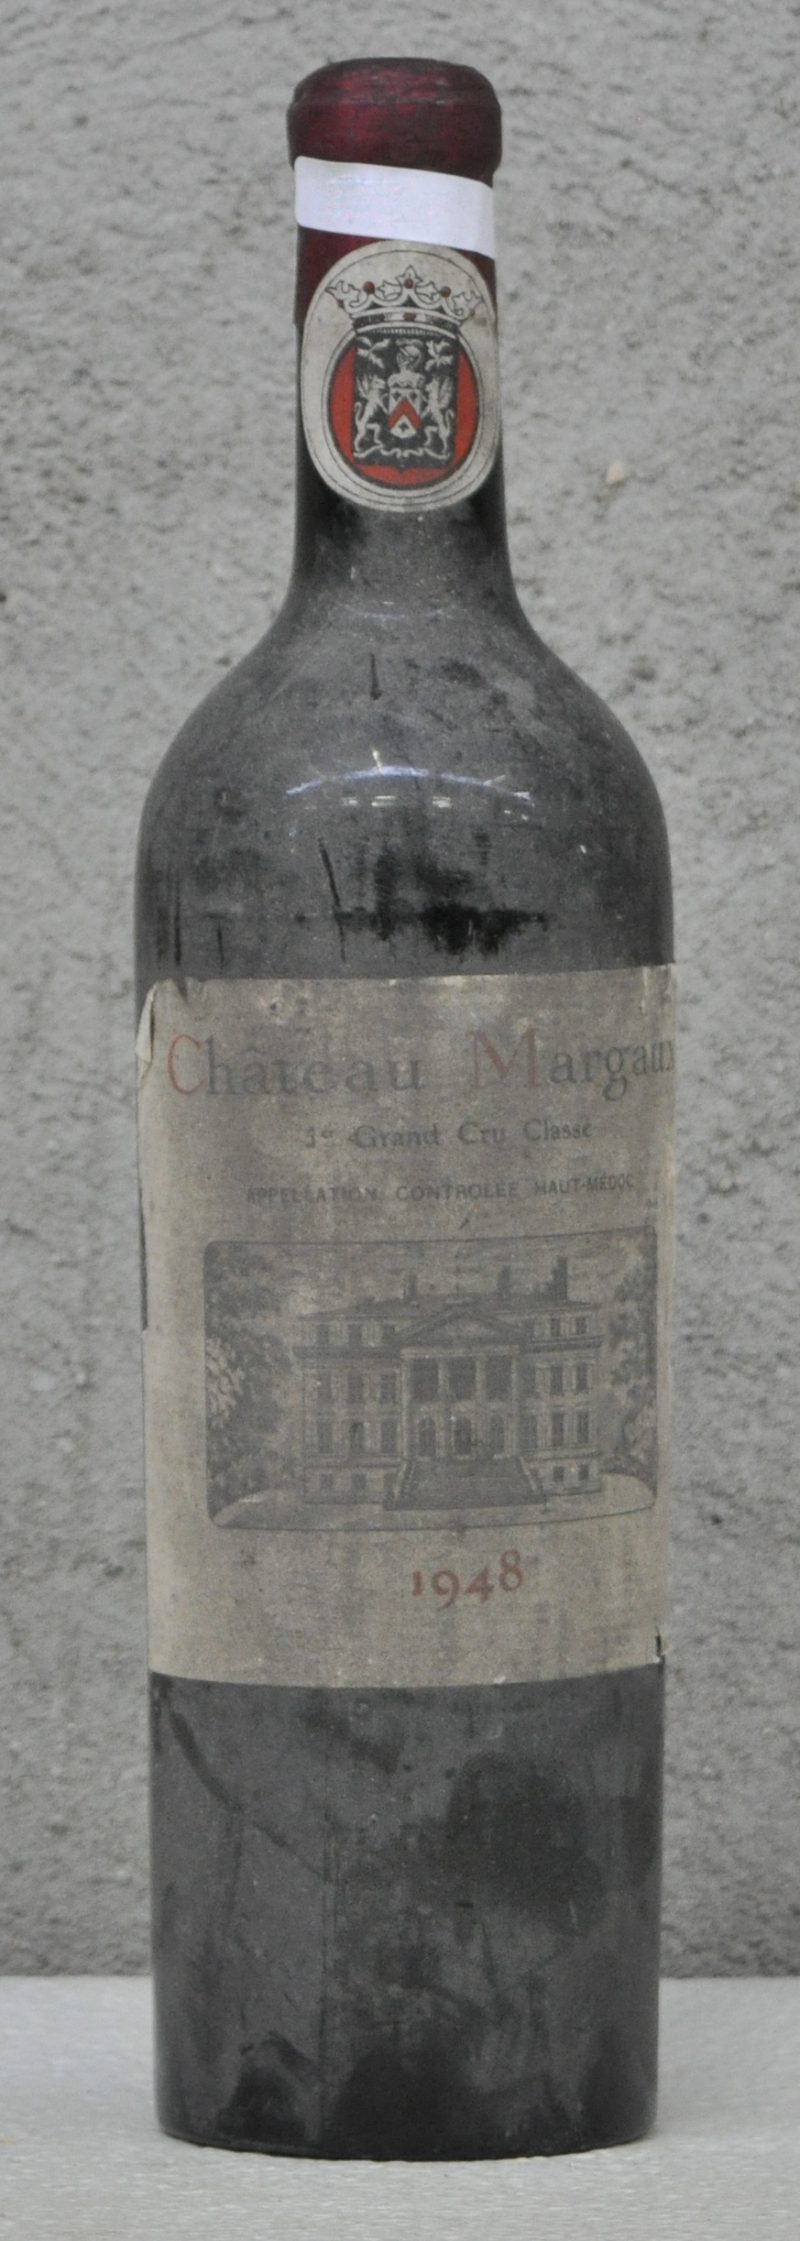 Ch. Margaux A.C. Margaux 1e grand cru classé    1948  aantal: 1 bt ls